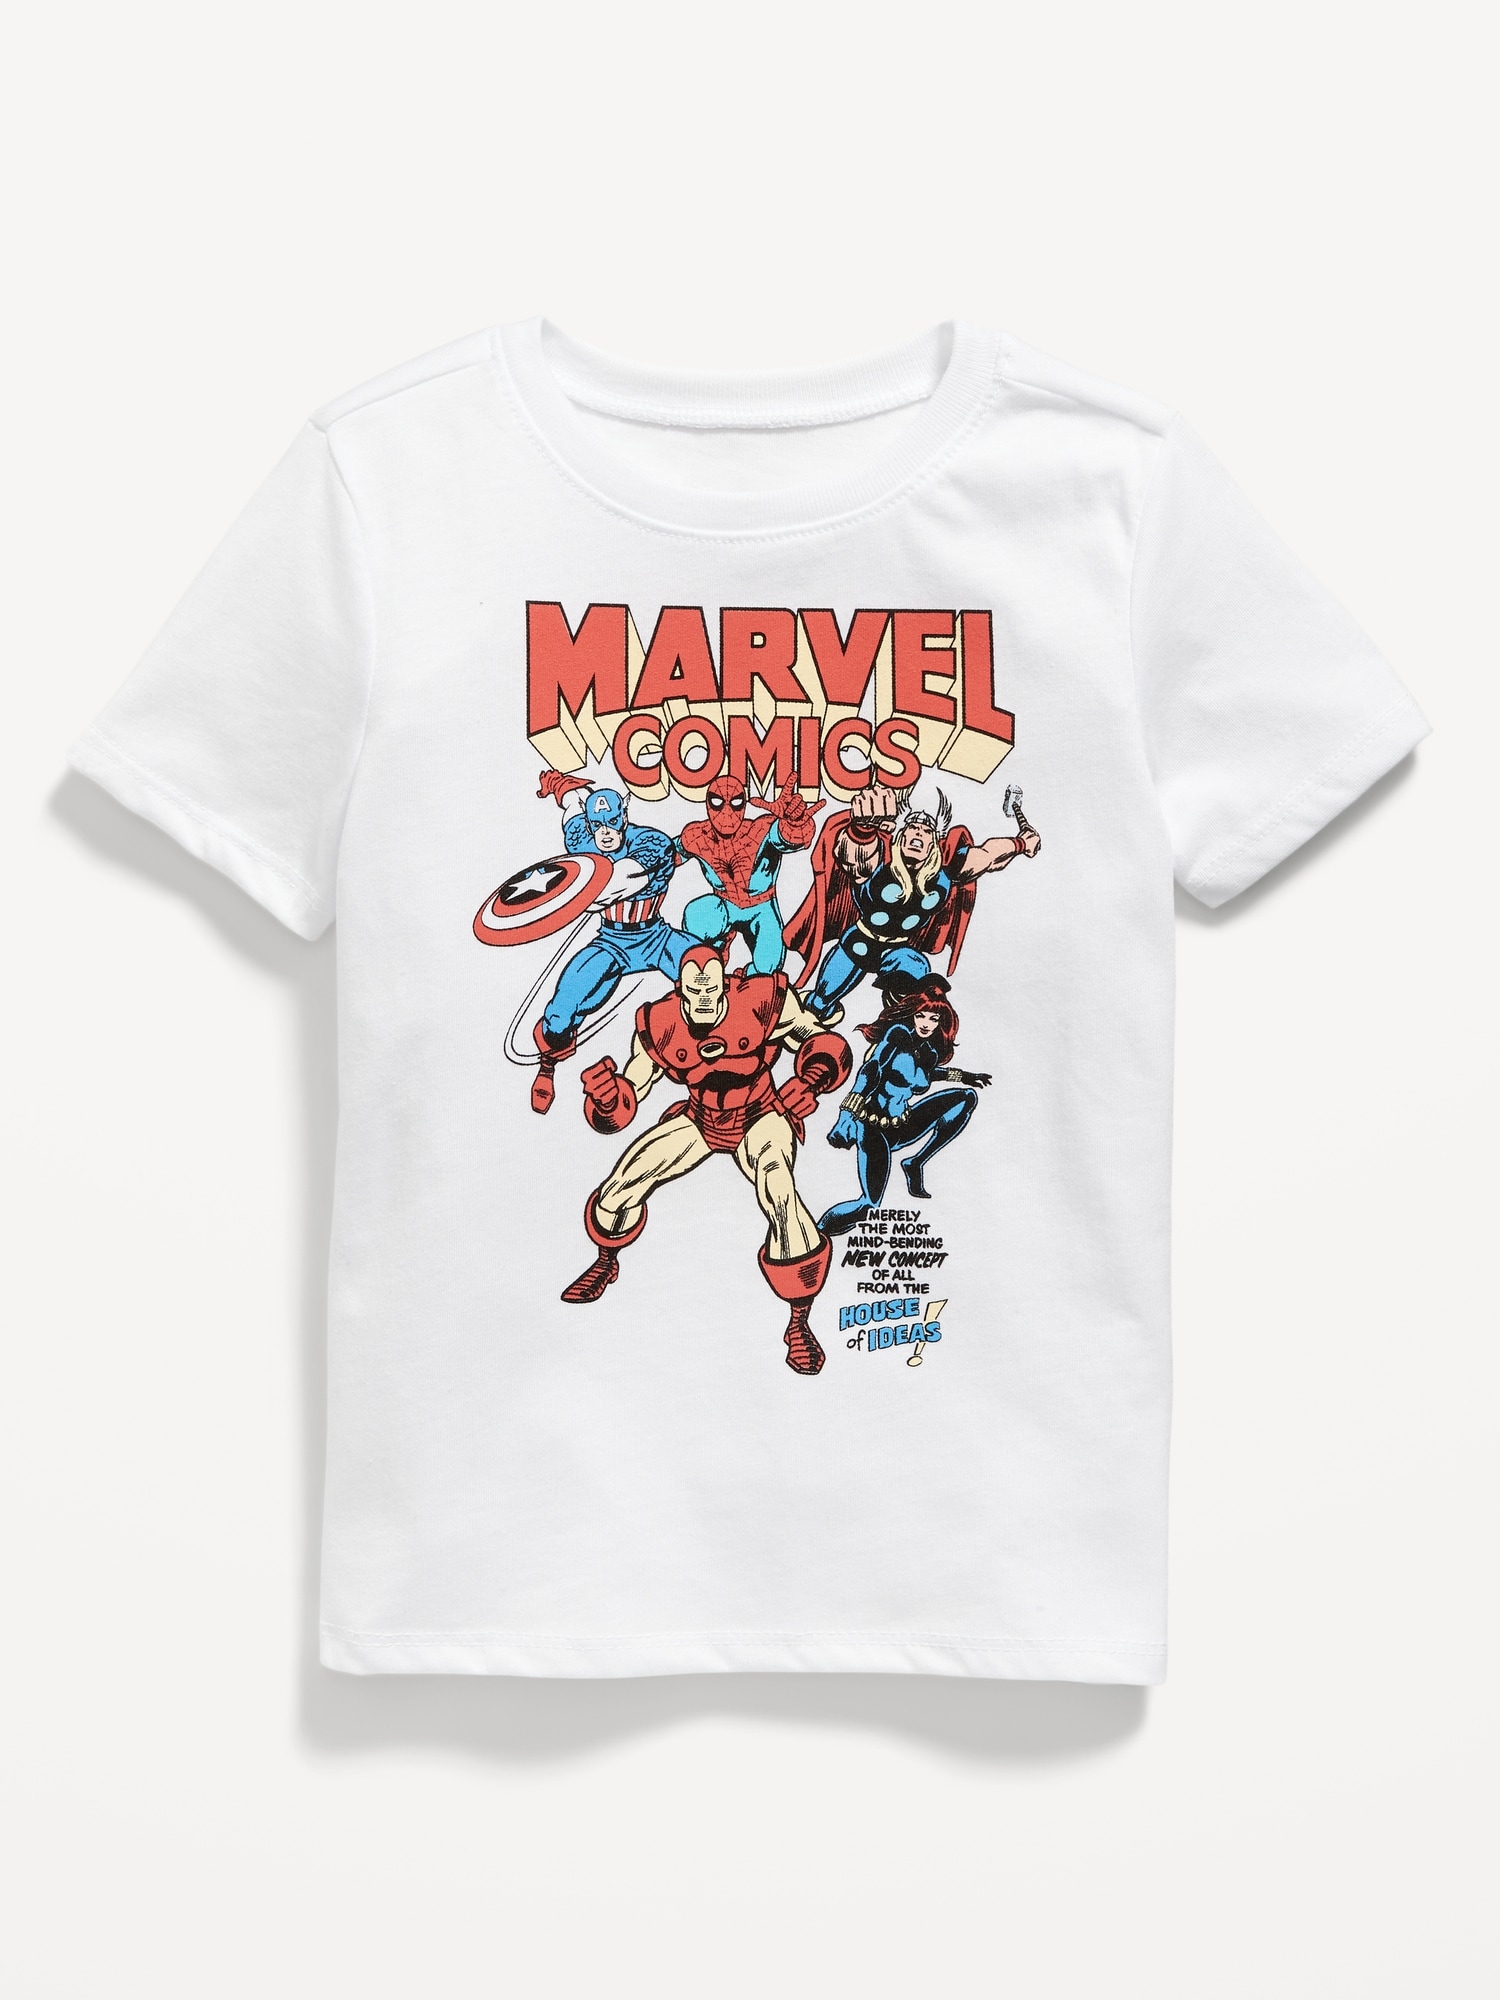 Unisex Marvel Graphic T-Shirt for Toddler Hot Deal